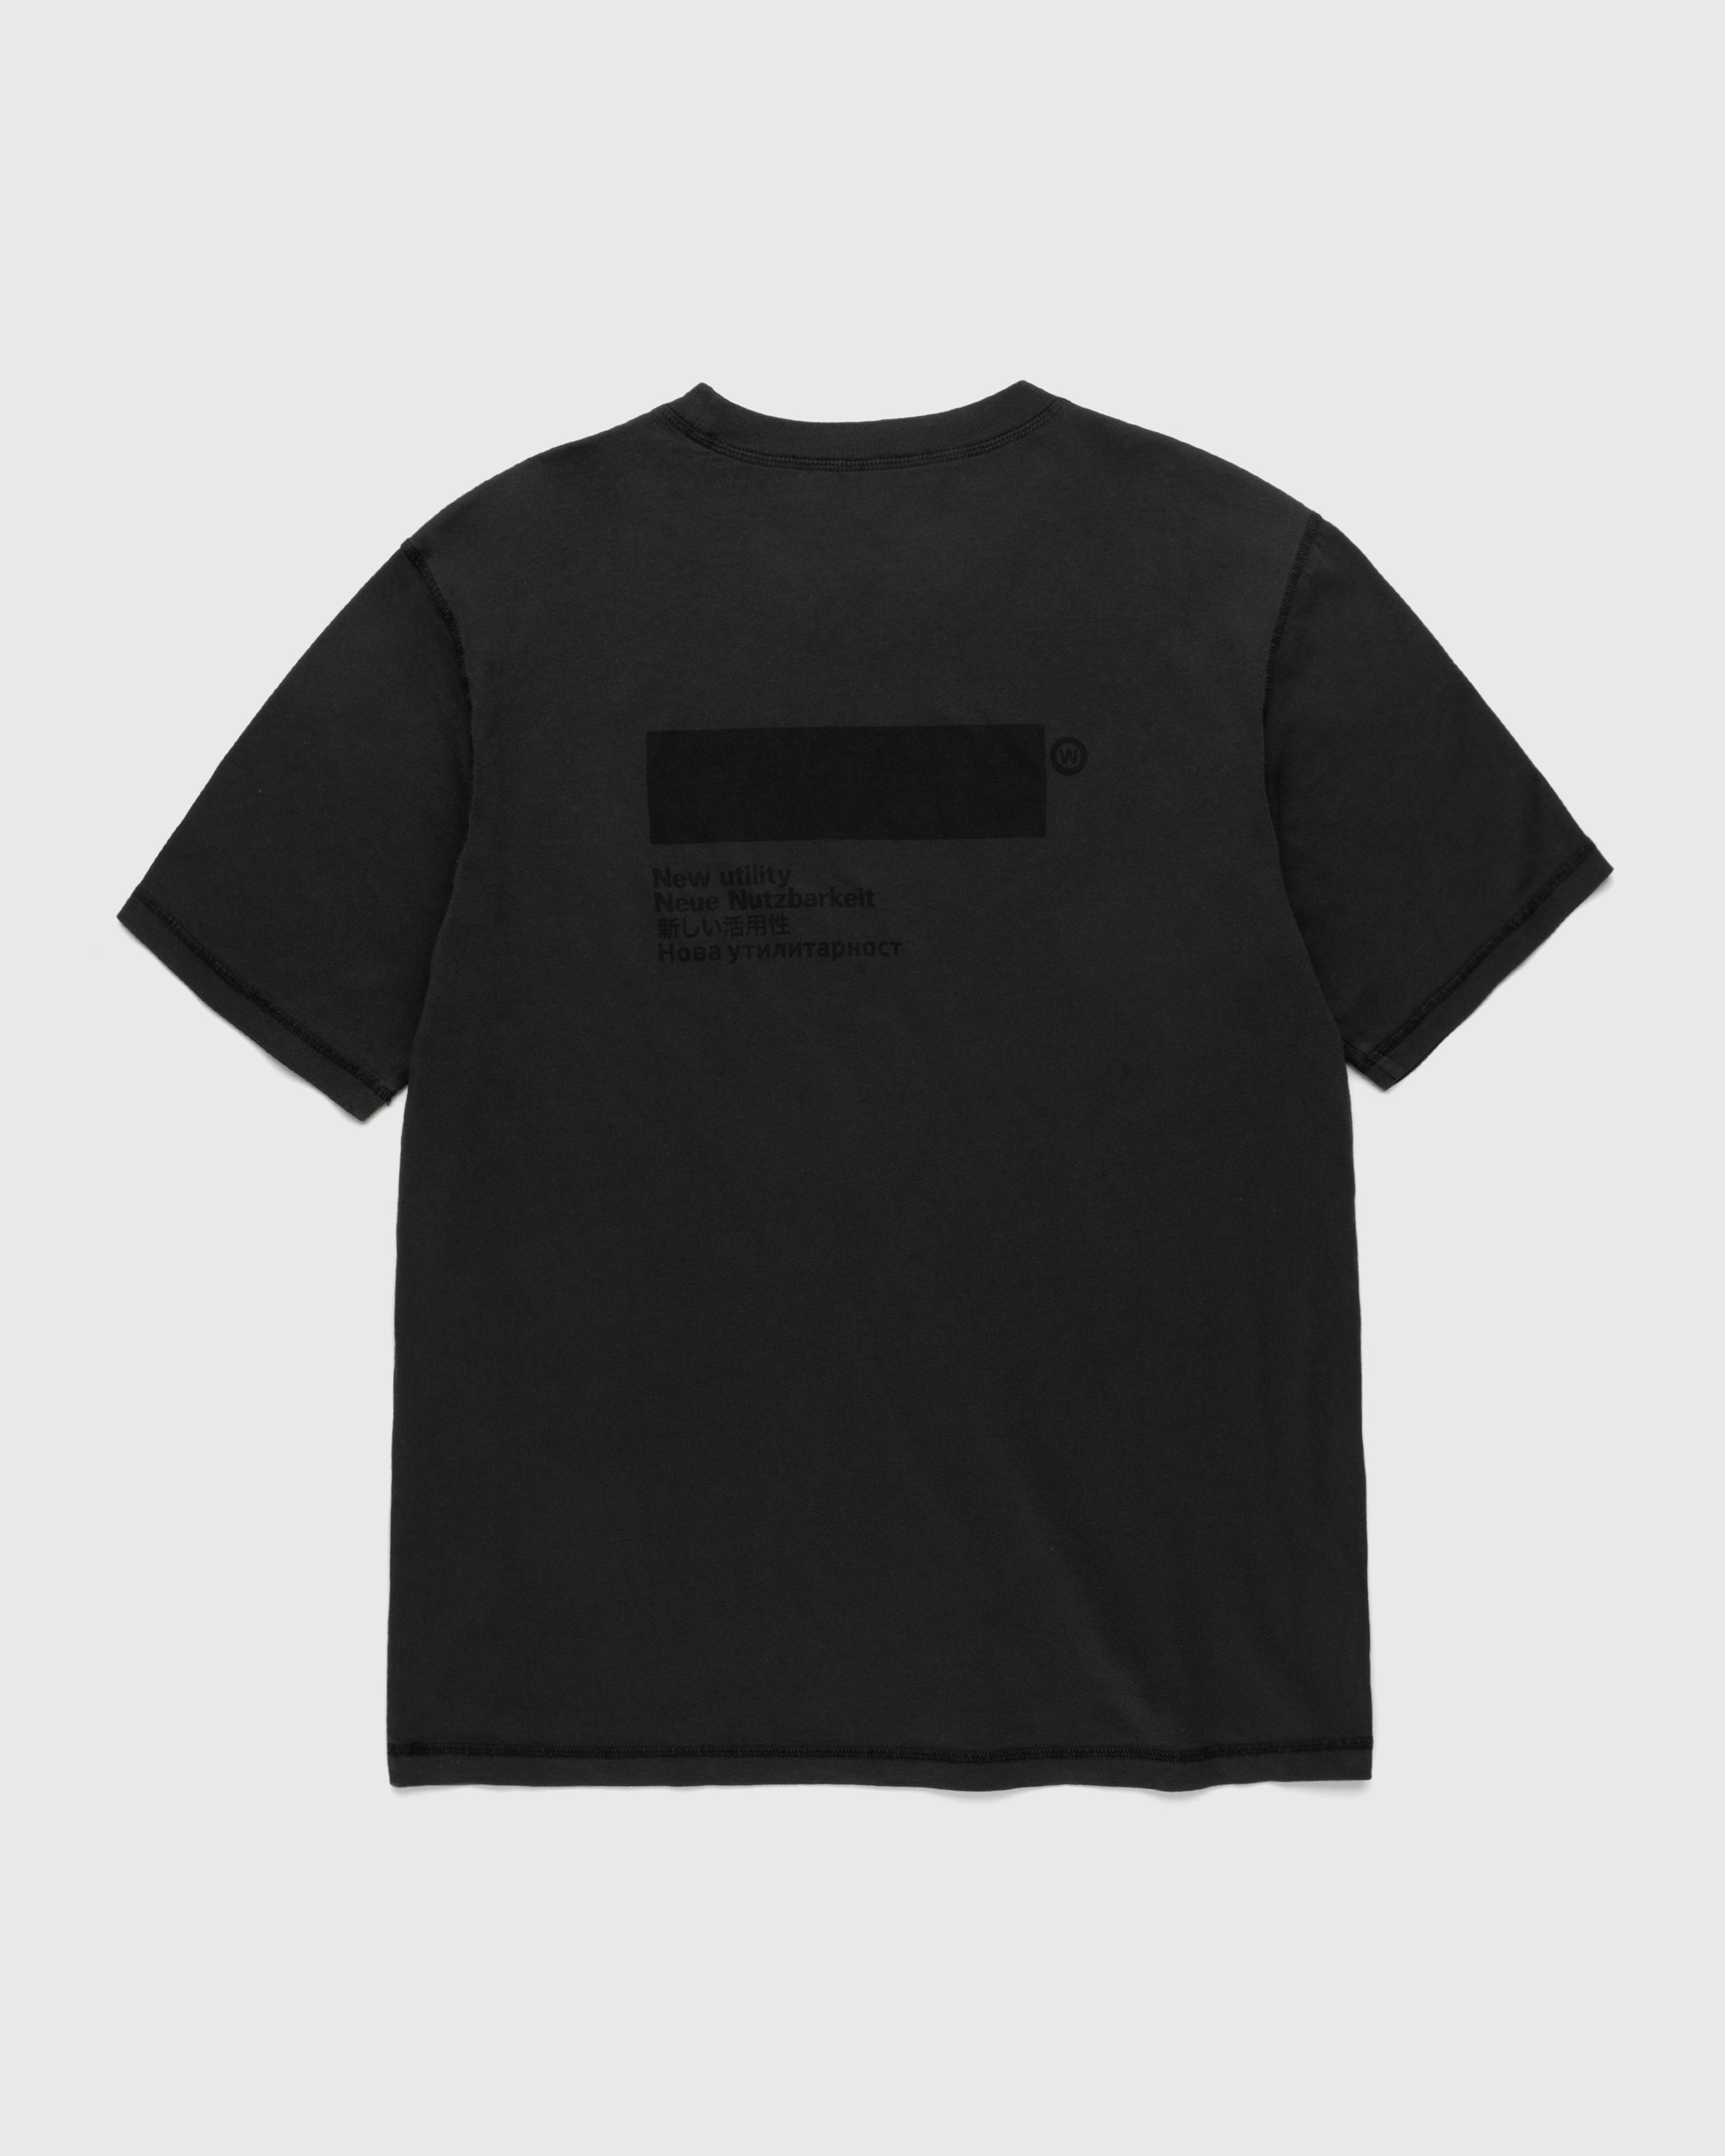 AFFXWRKS - Standardized T-Shirt Black - Clothing - Black - Image 2